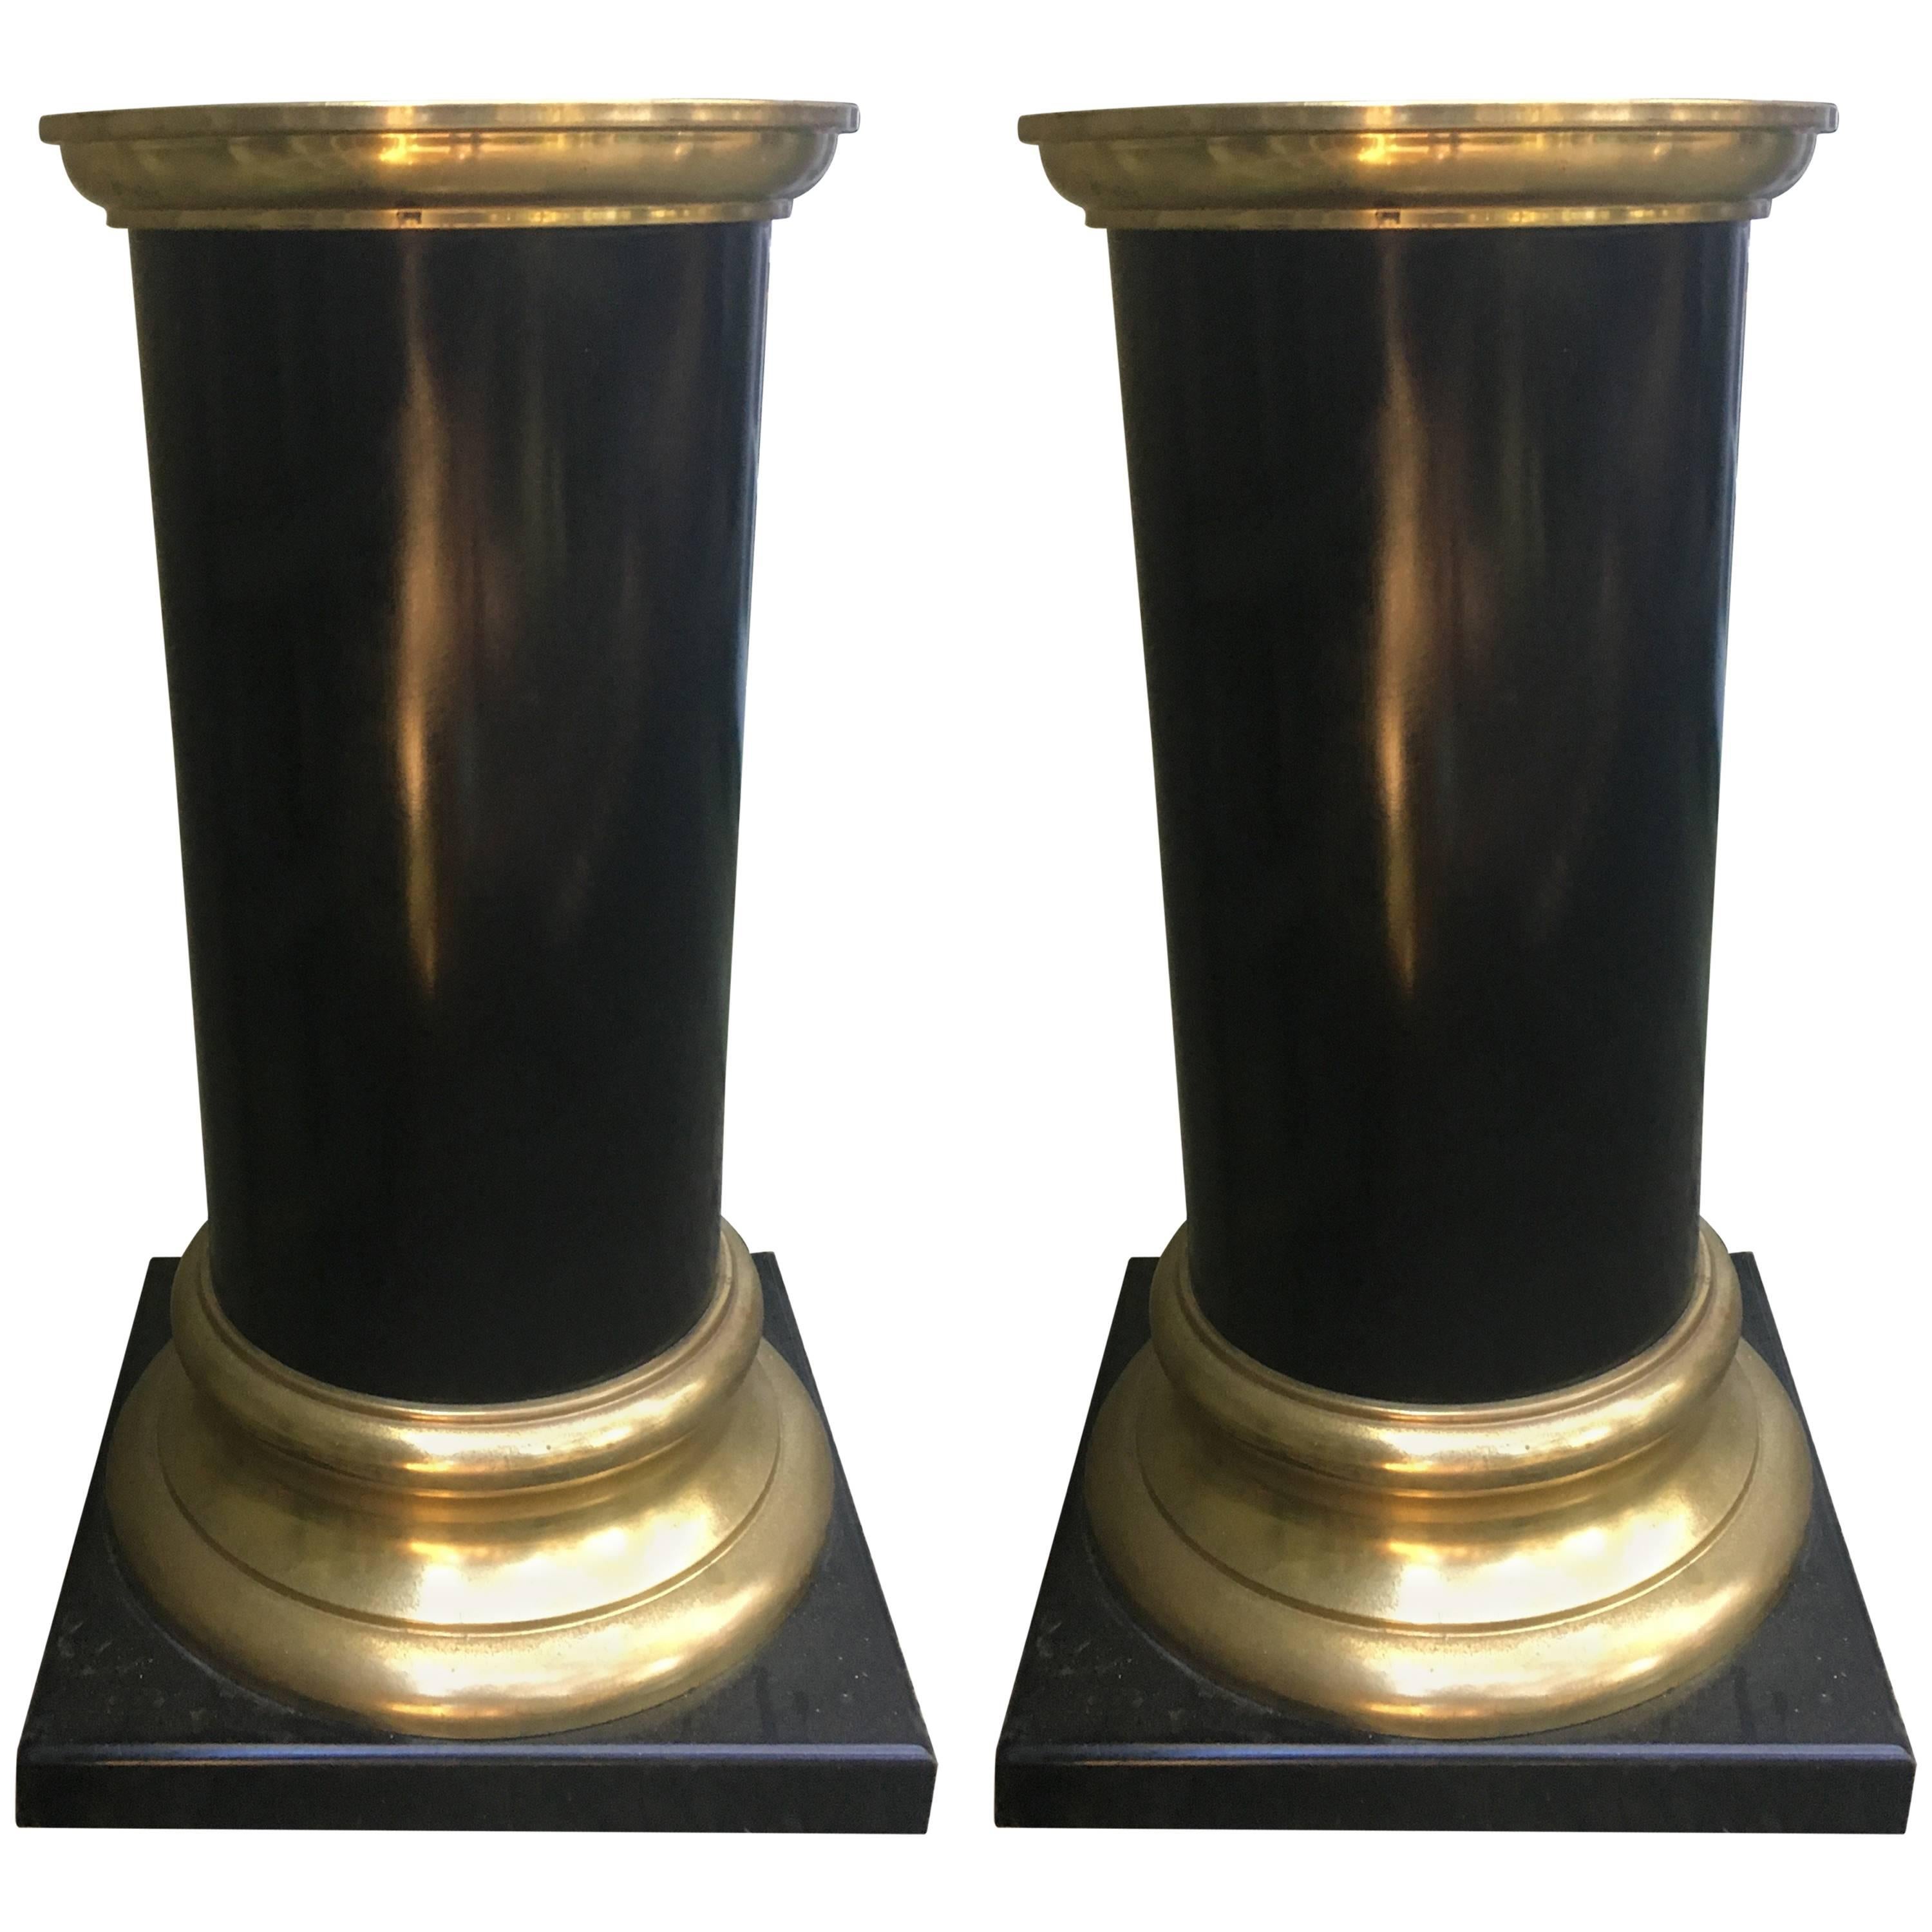 Handsome Pair of Wood and Brass Mid-Century Modern Pedestals